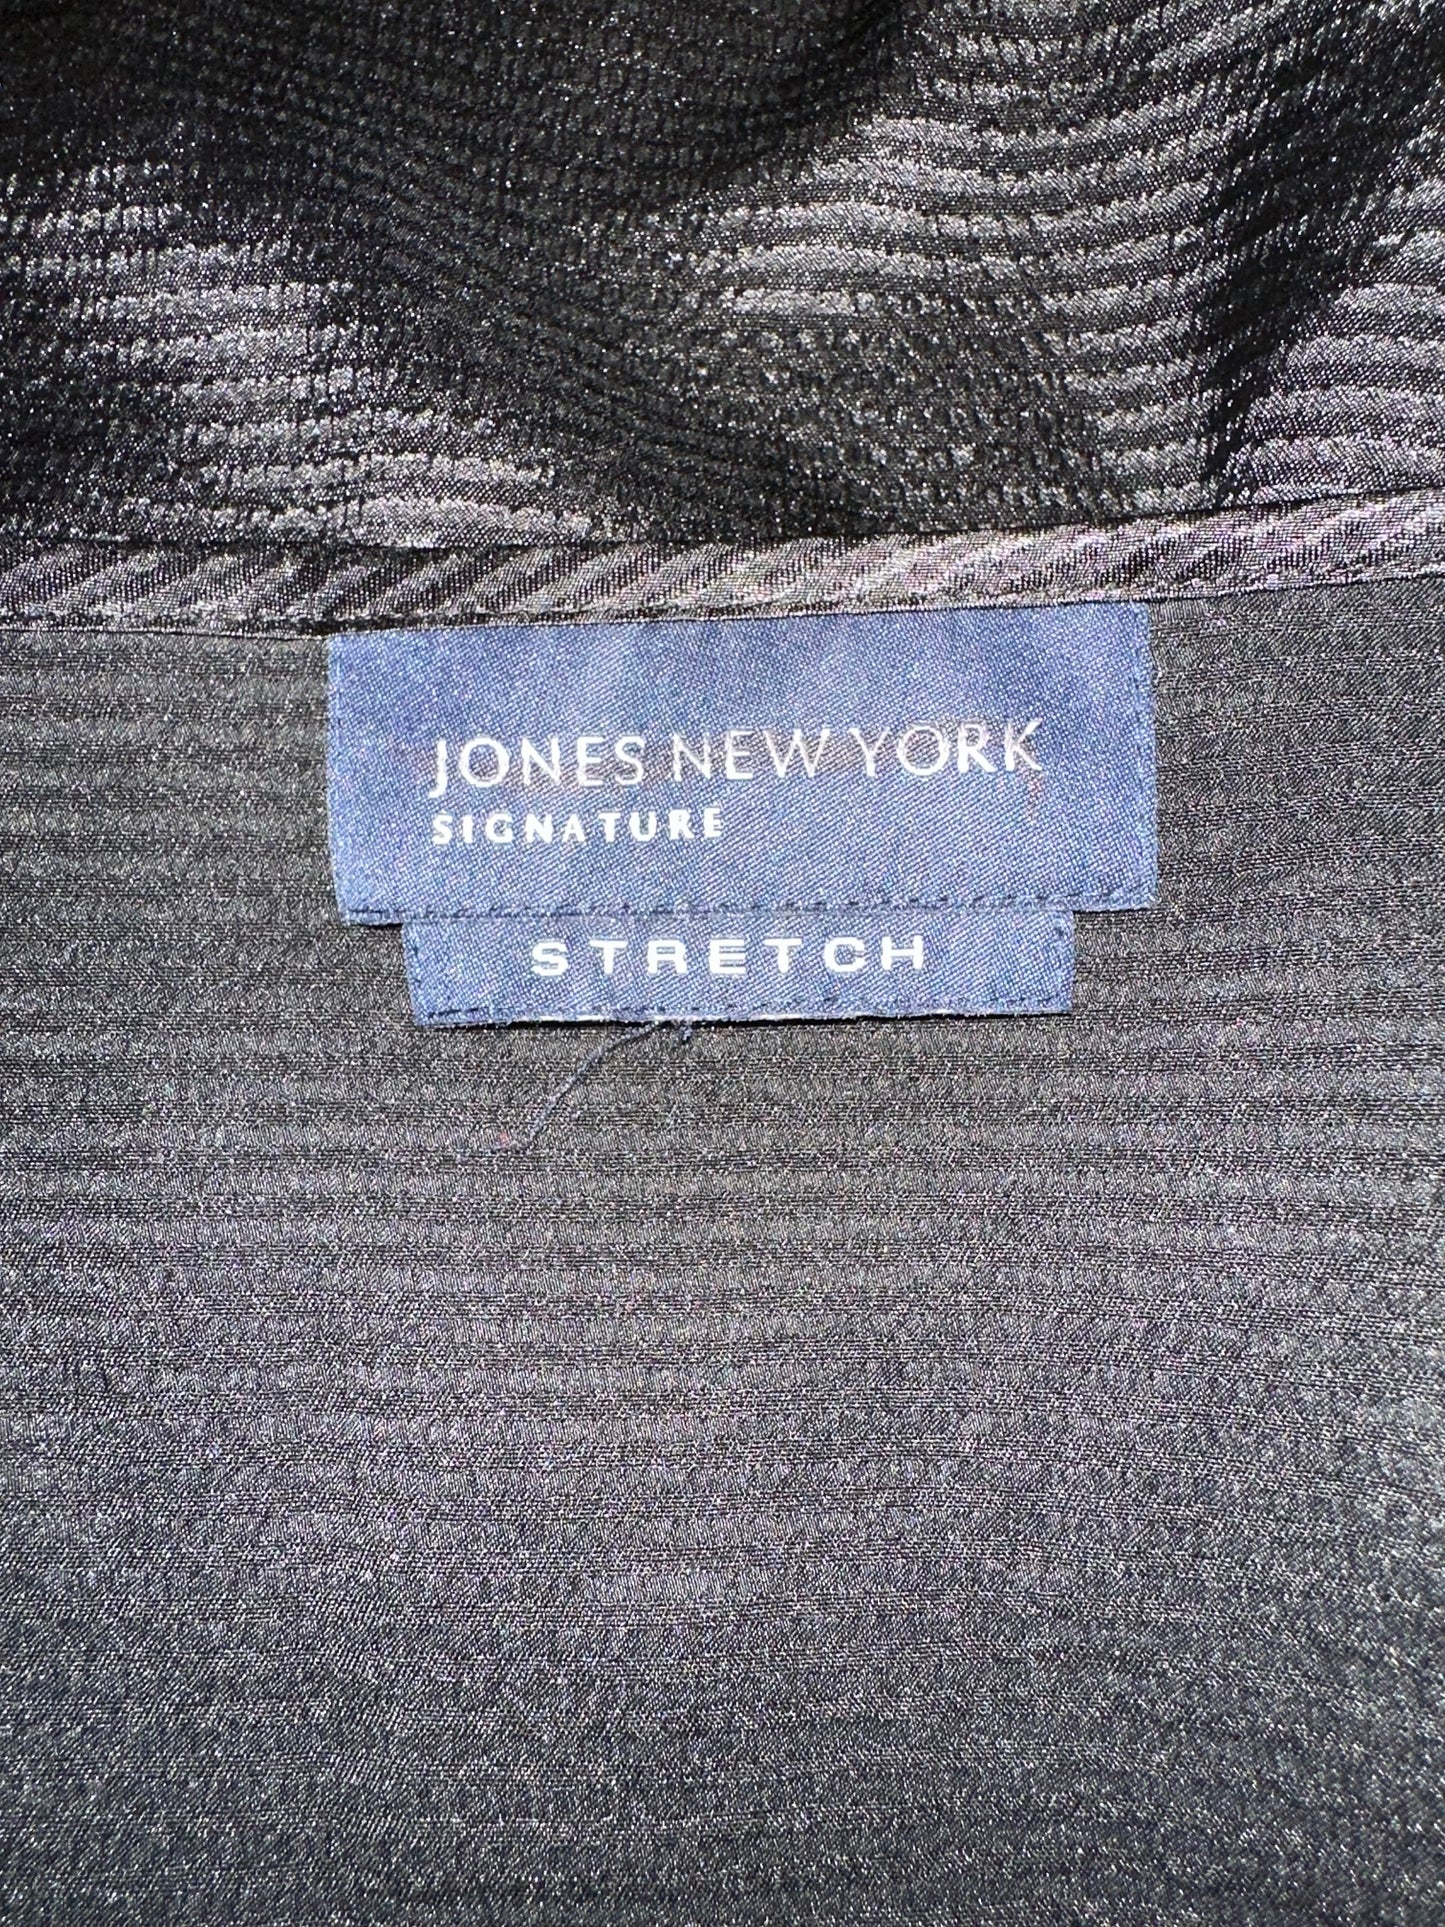 Jones New York Signature - Black Smock Shirt